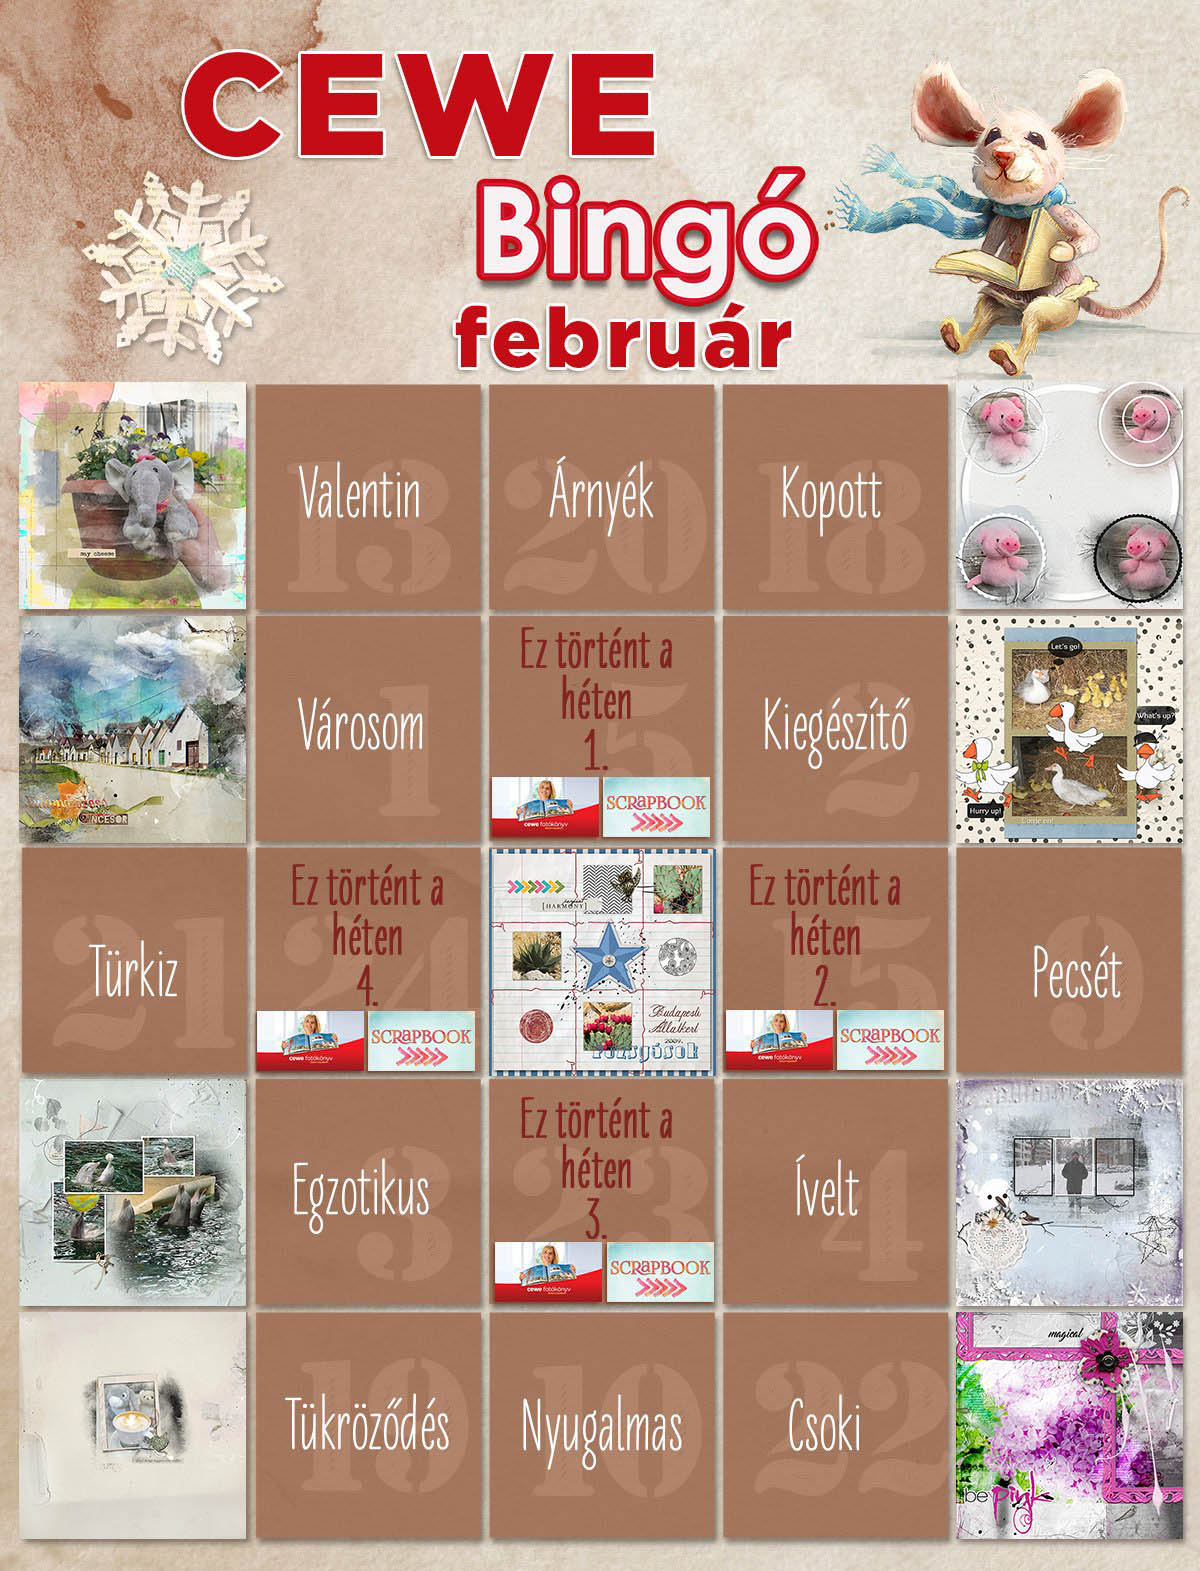 9-es bingó február